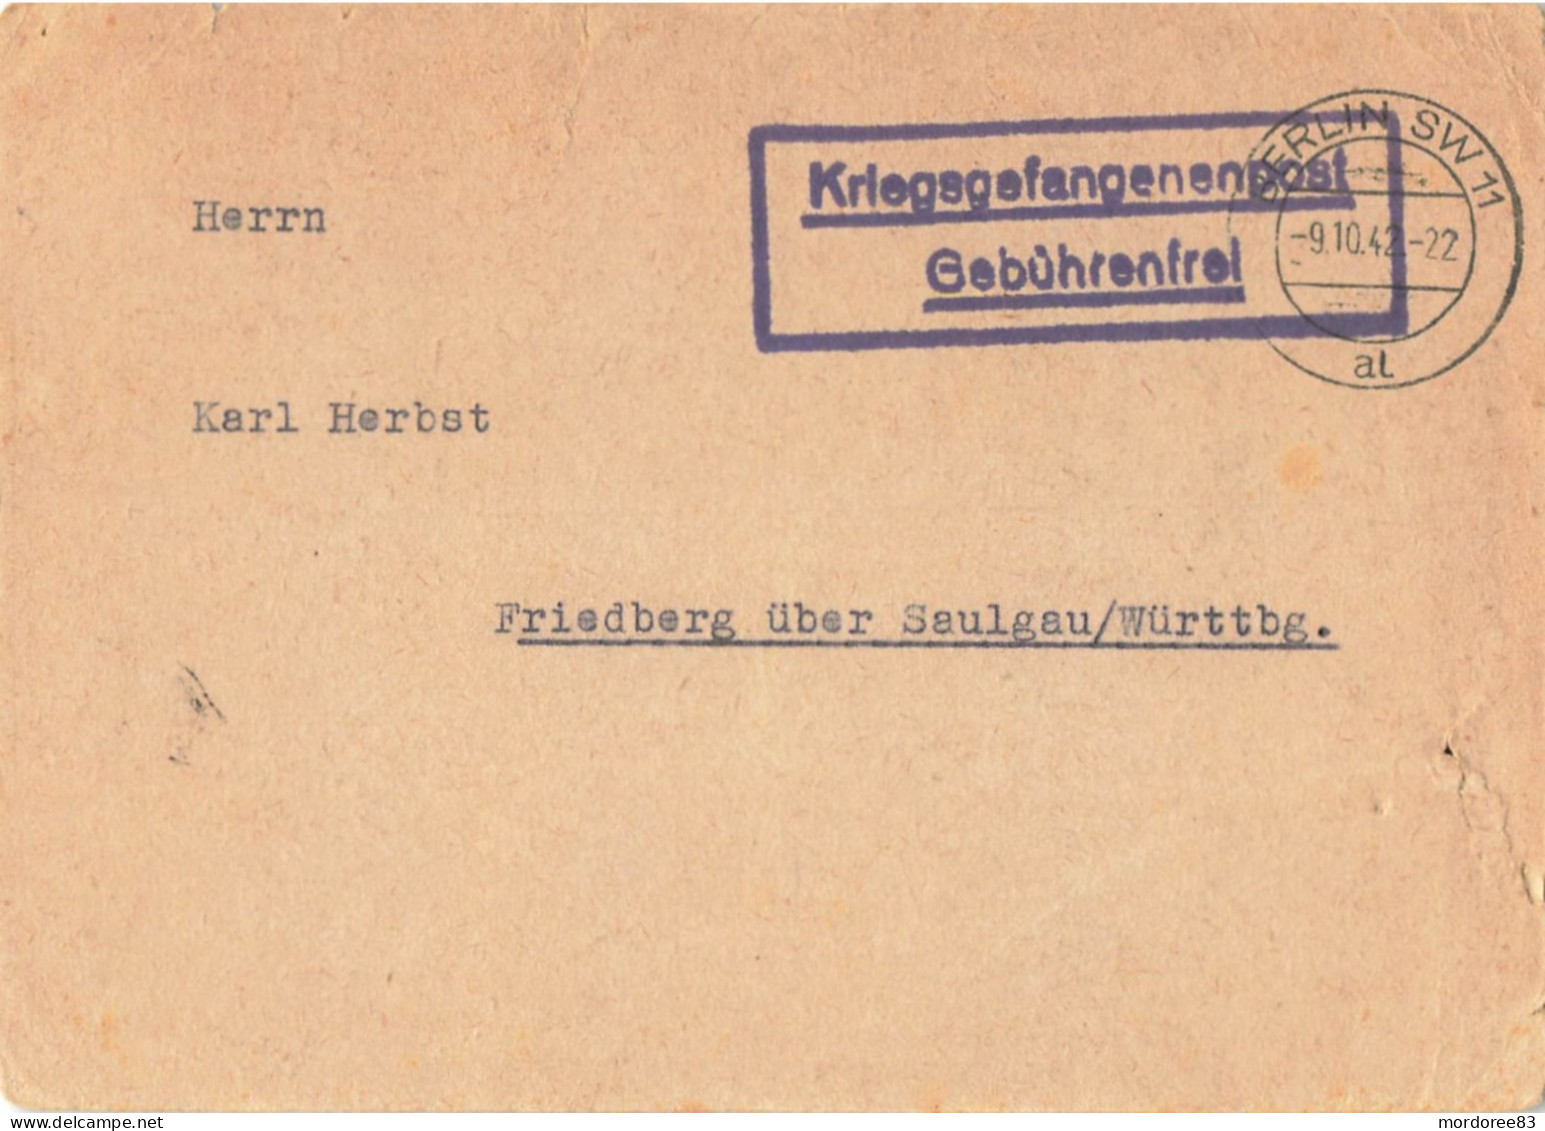 KRIEGSGEFANGENENPOST GEBUHRENFREI BERLIN 9/10/42 WAR CAMP 133 OTTAWA CANADA - Covers & Documents